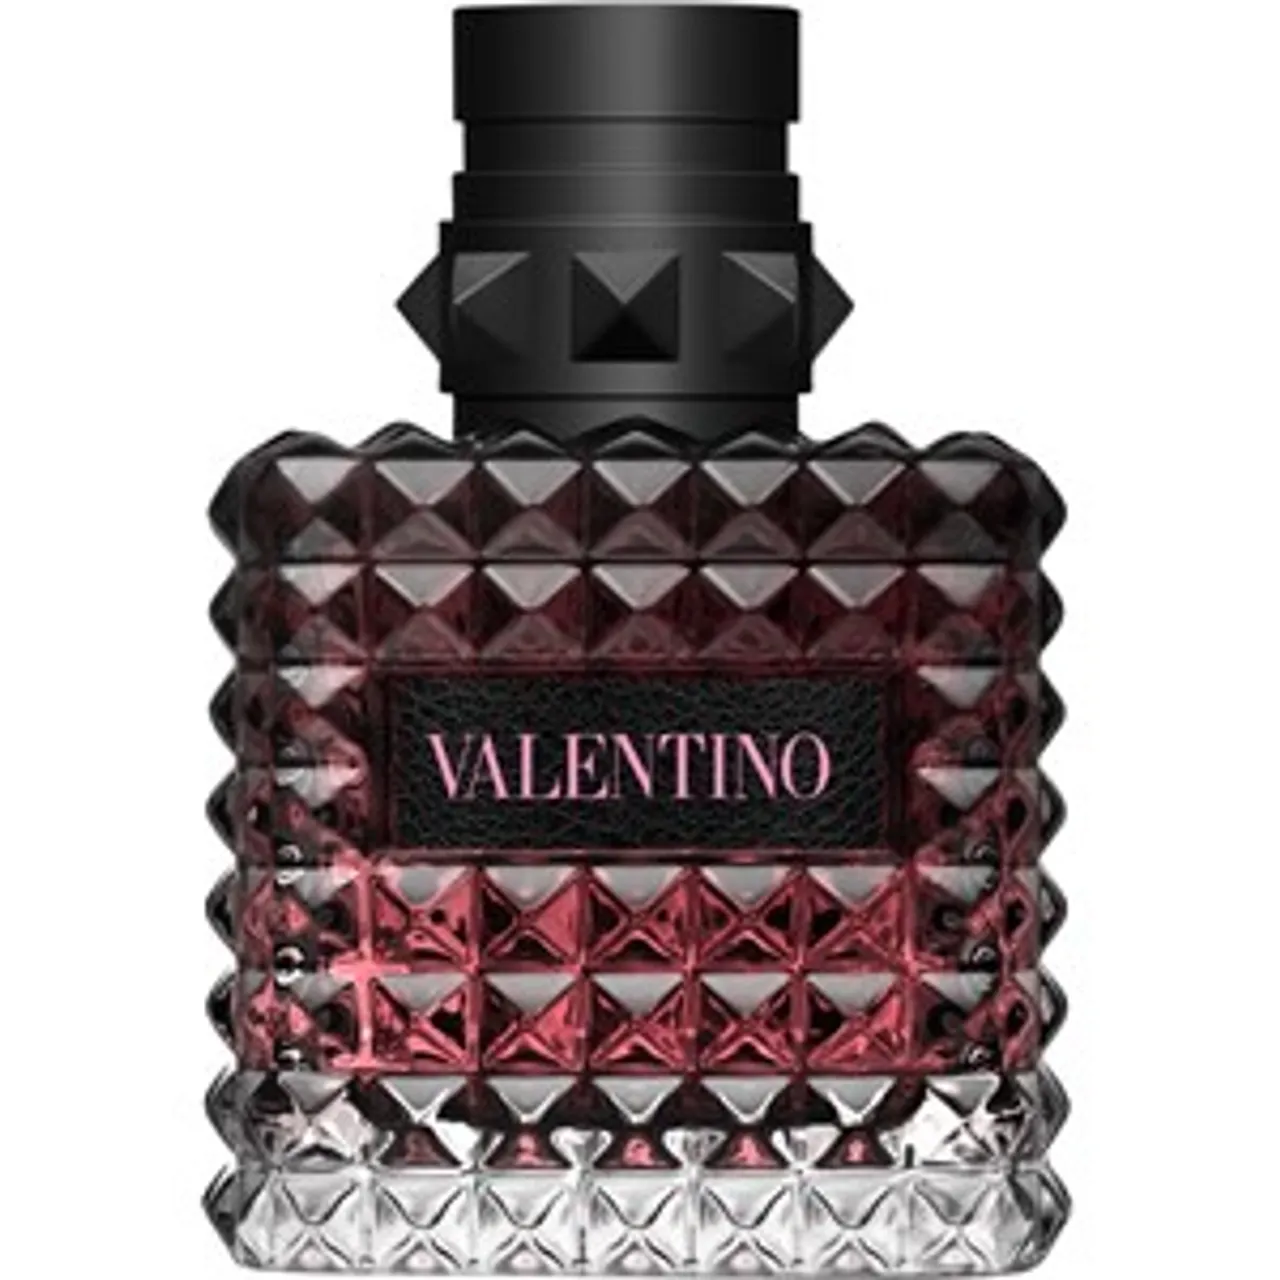 Valentino Eau de Parfum Spray Intense 2 100 ml